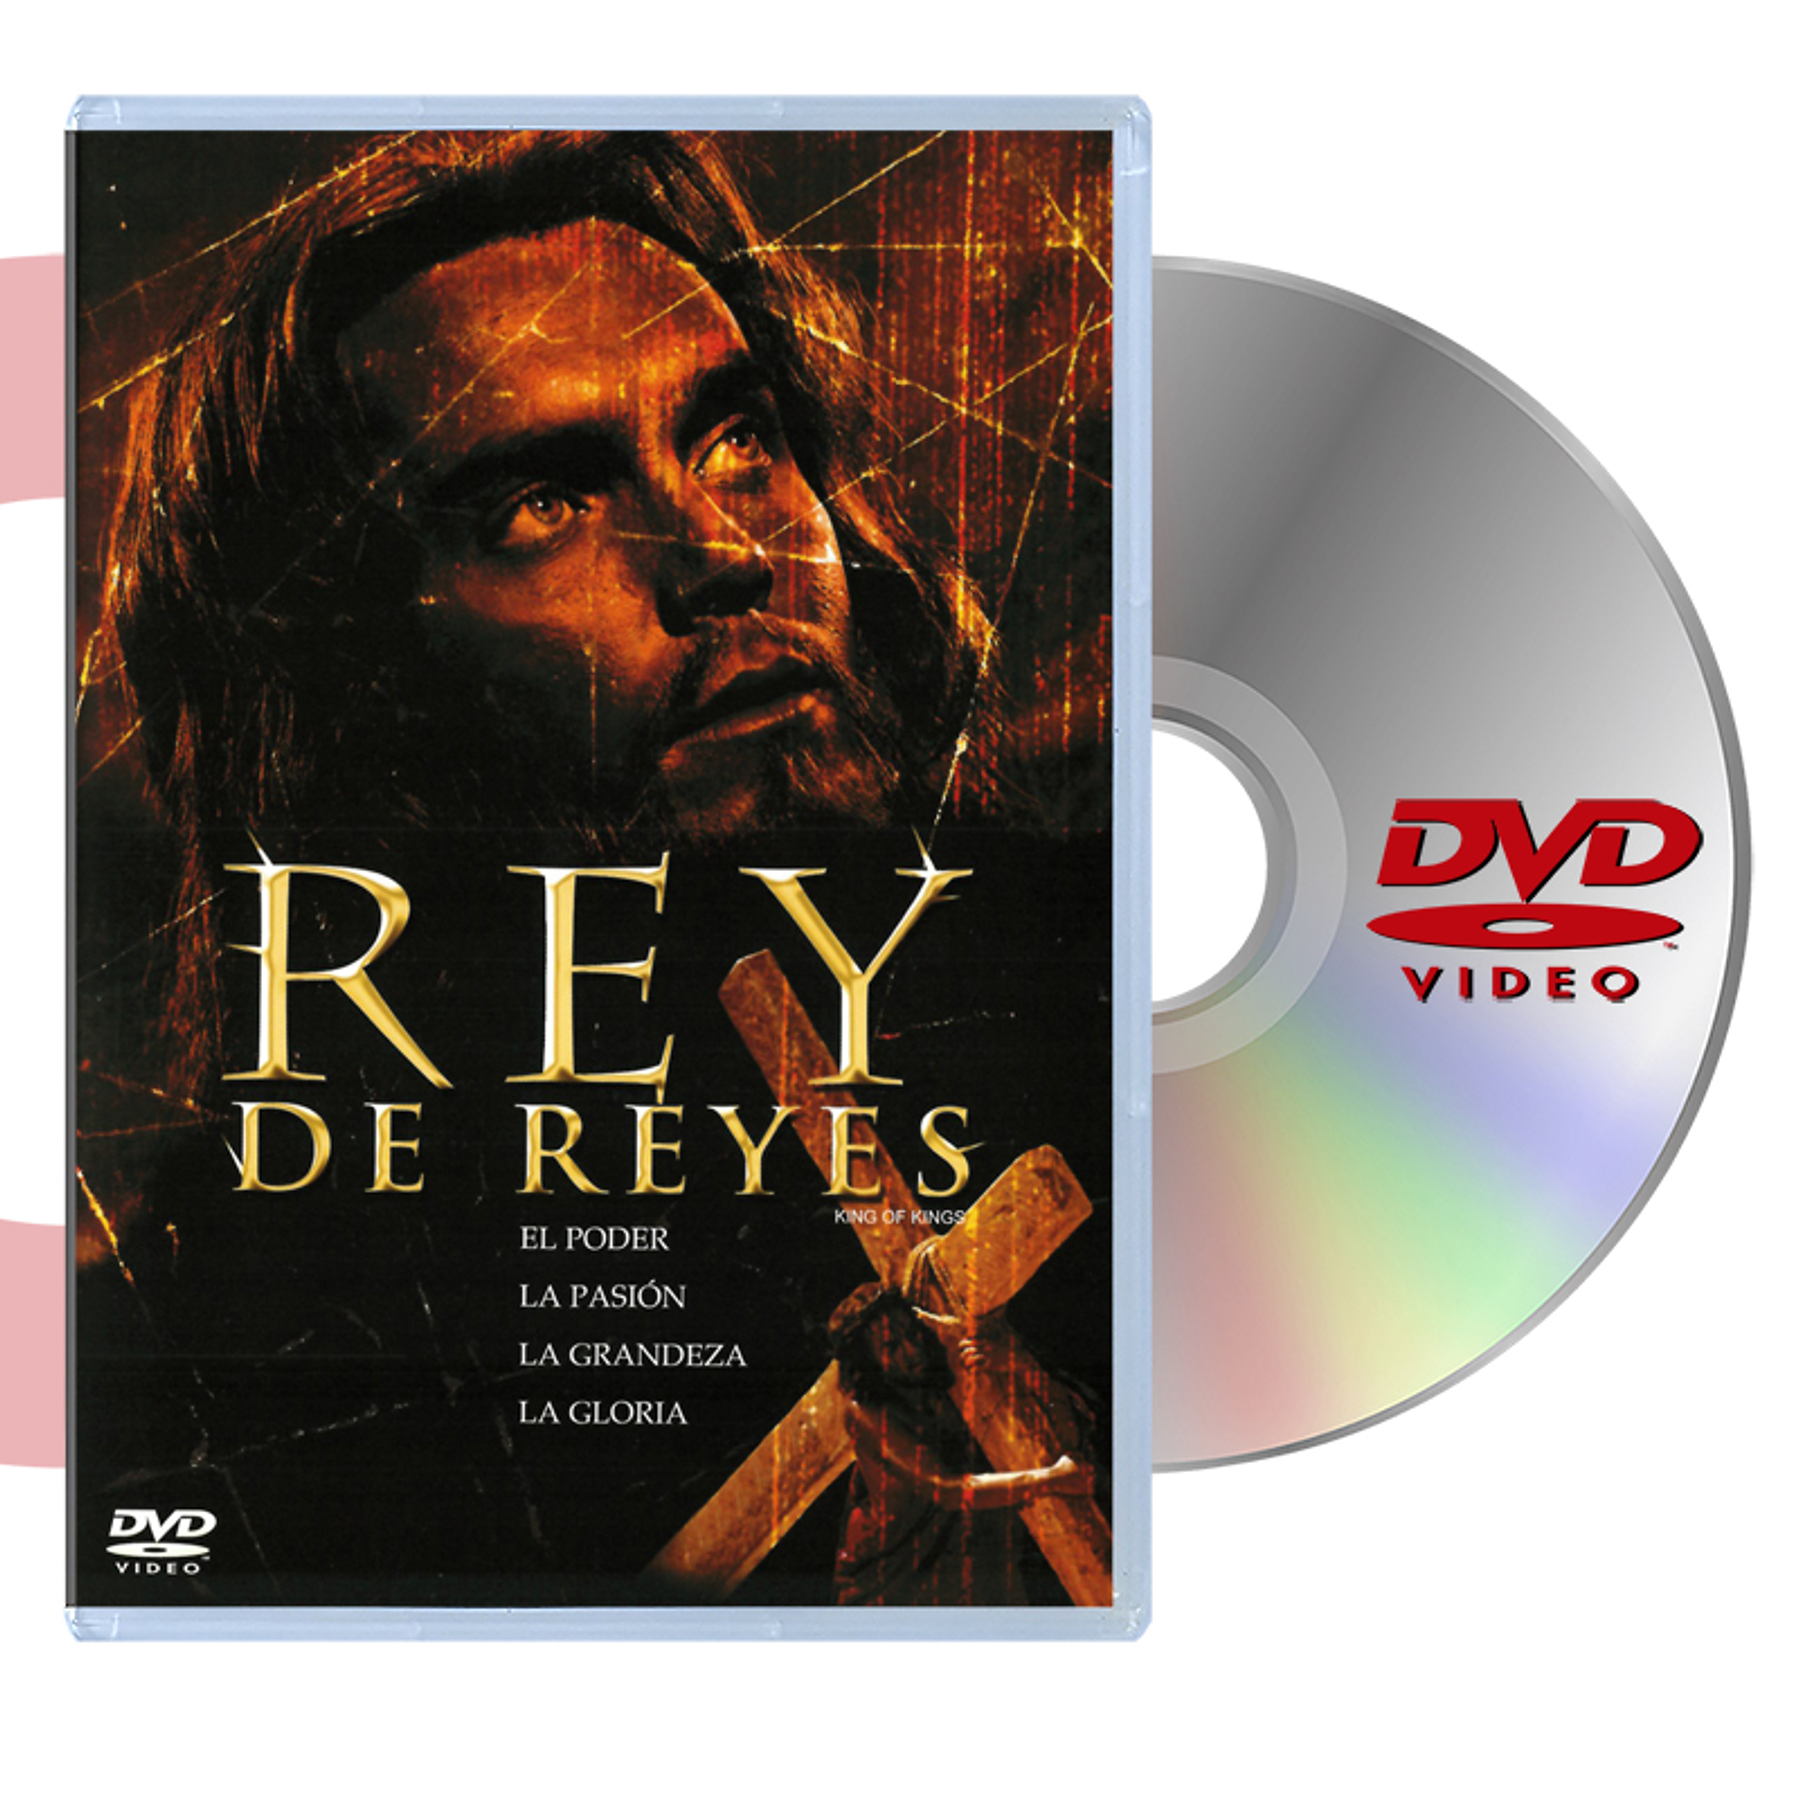 DVD REY DE REYES